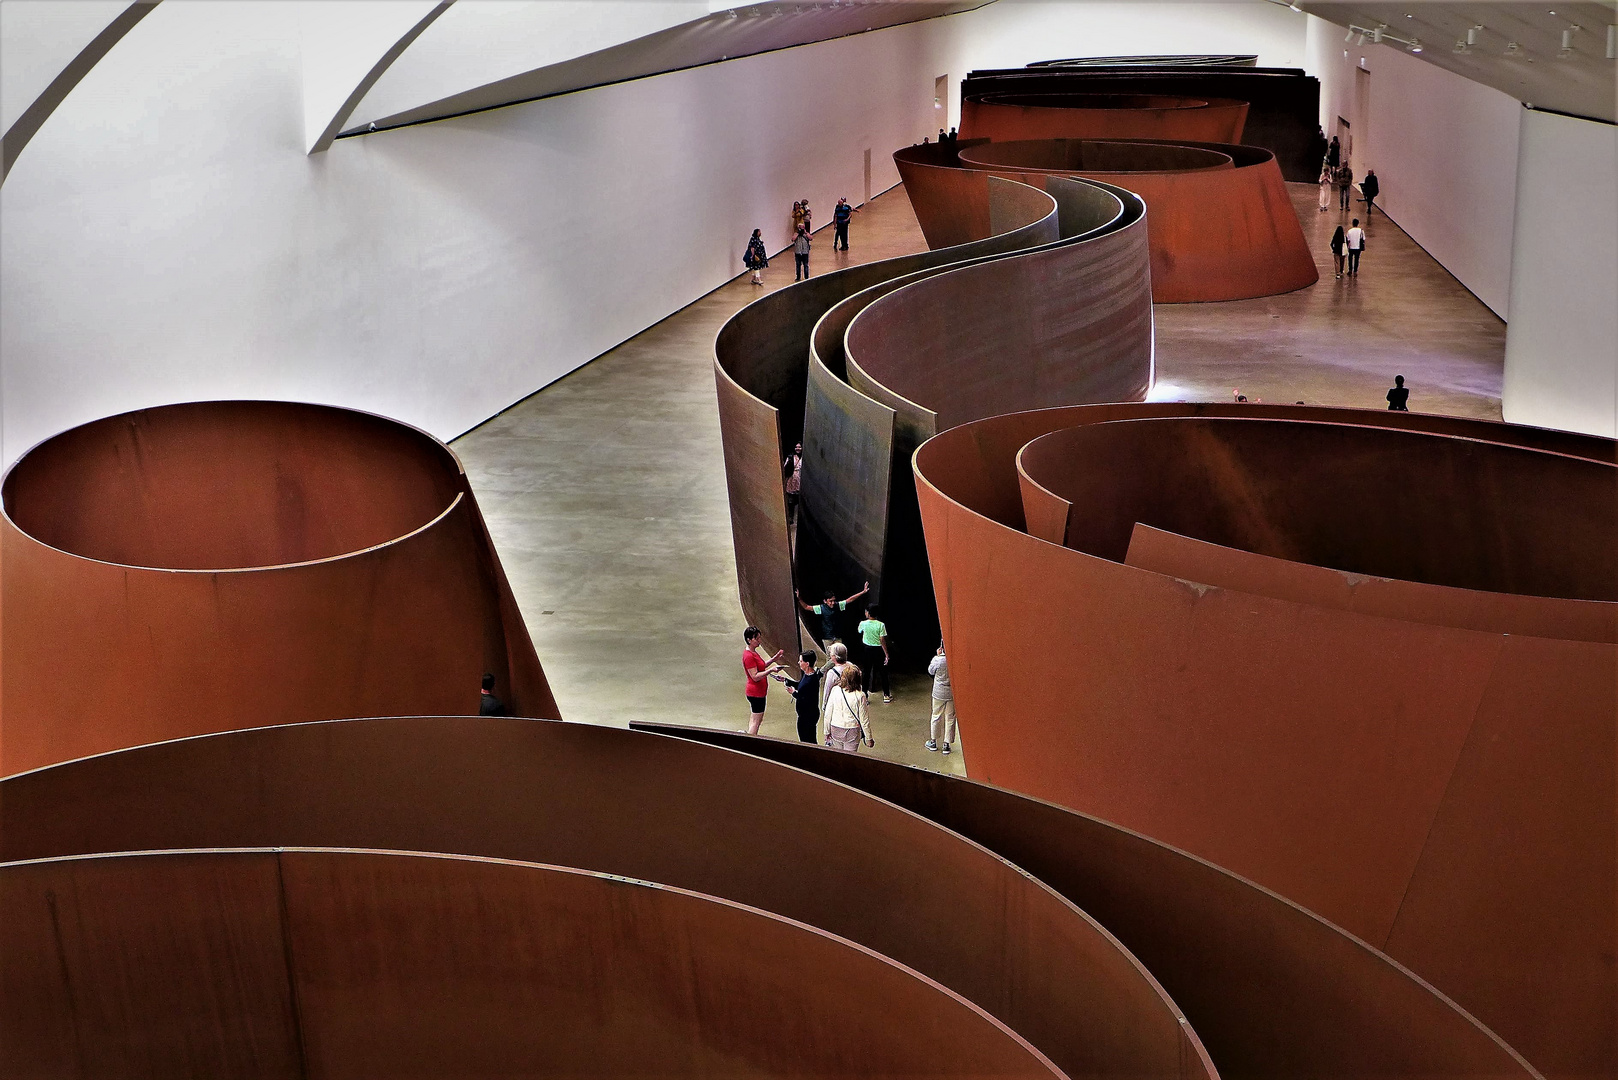 A day at Guggenheim